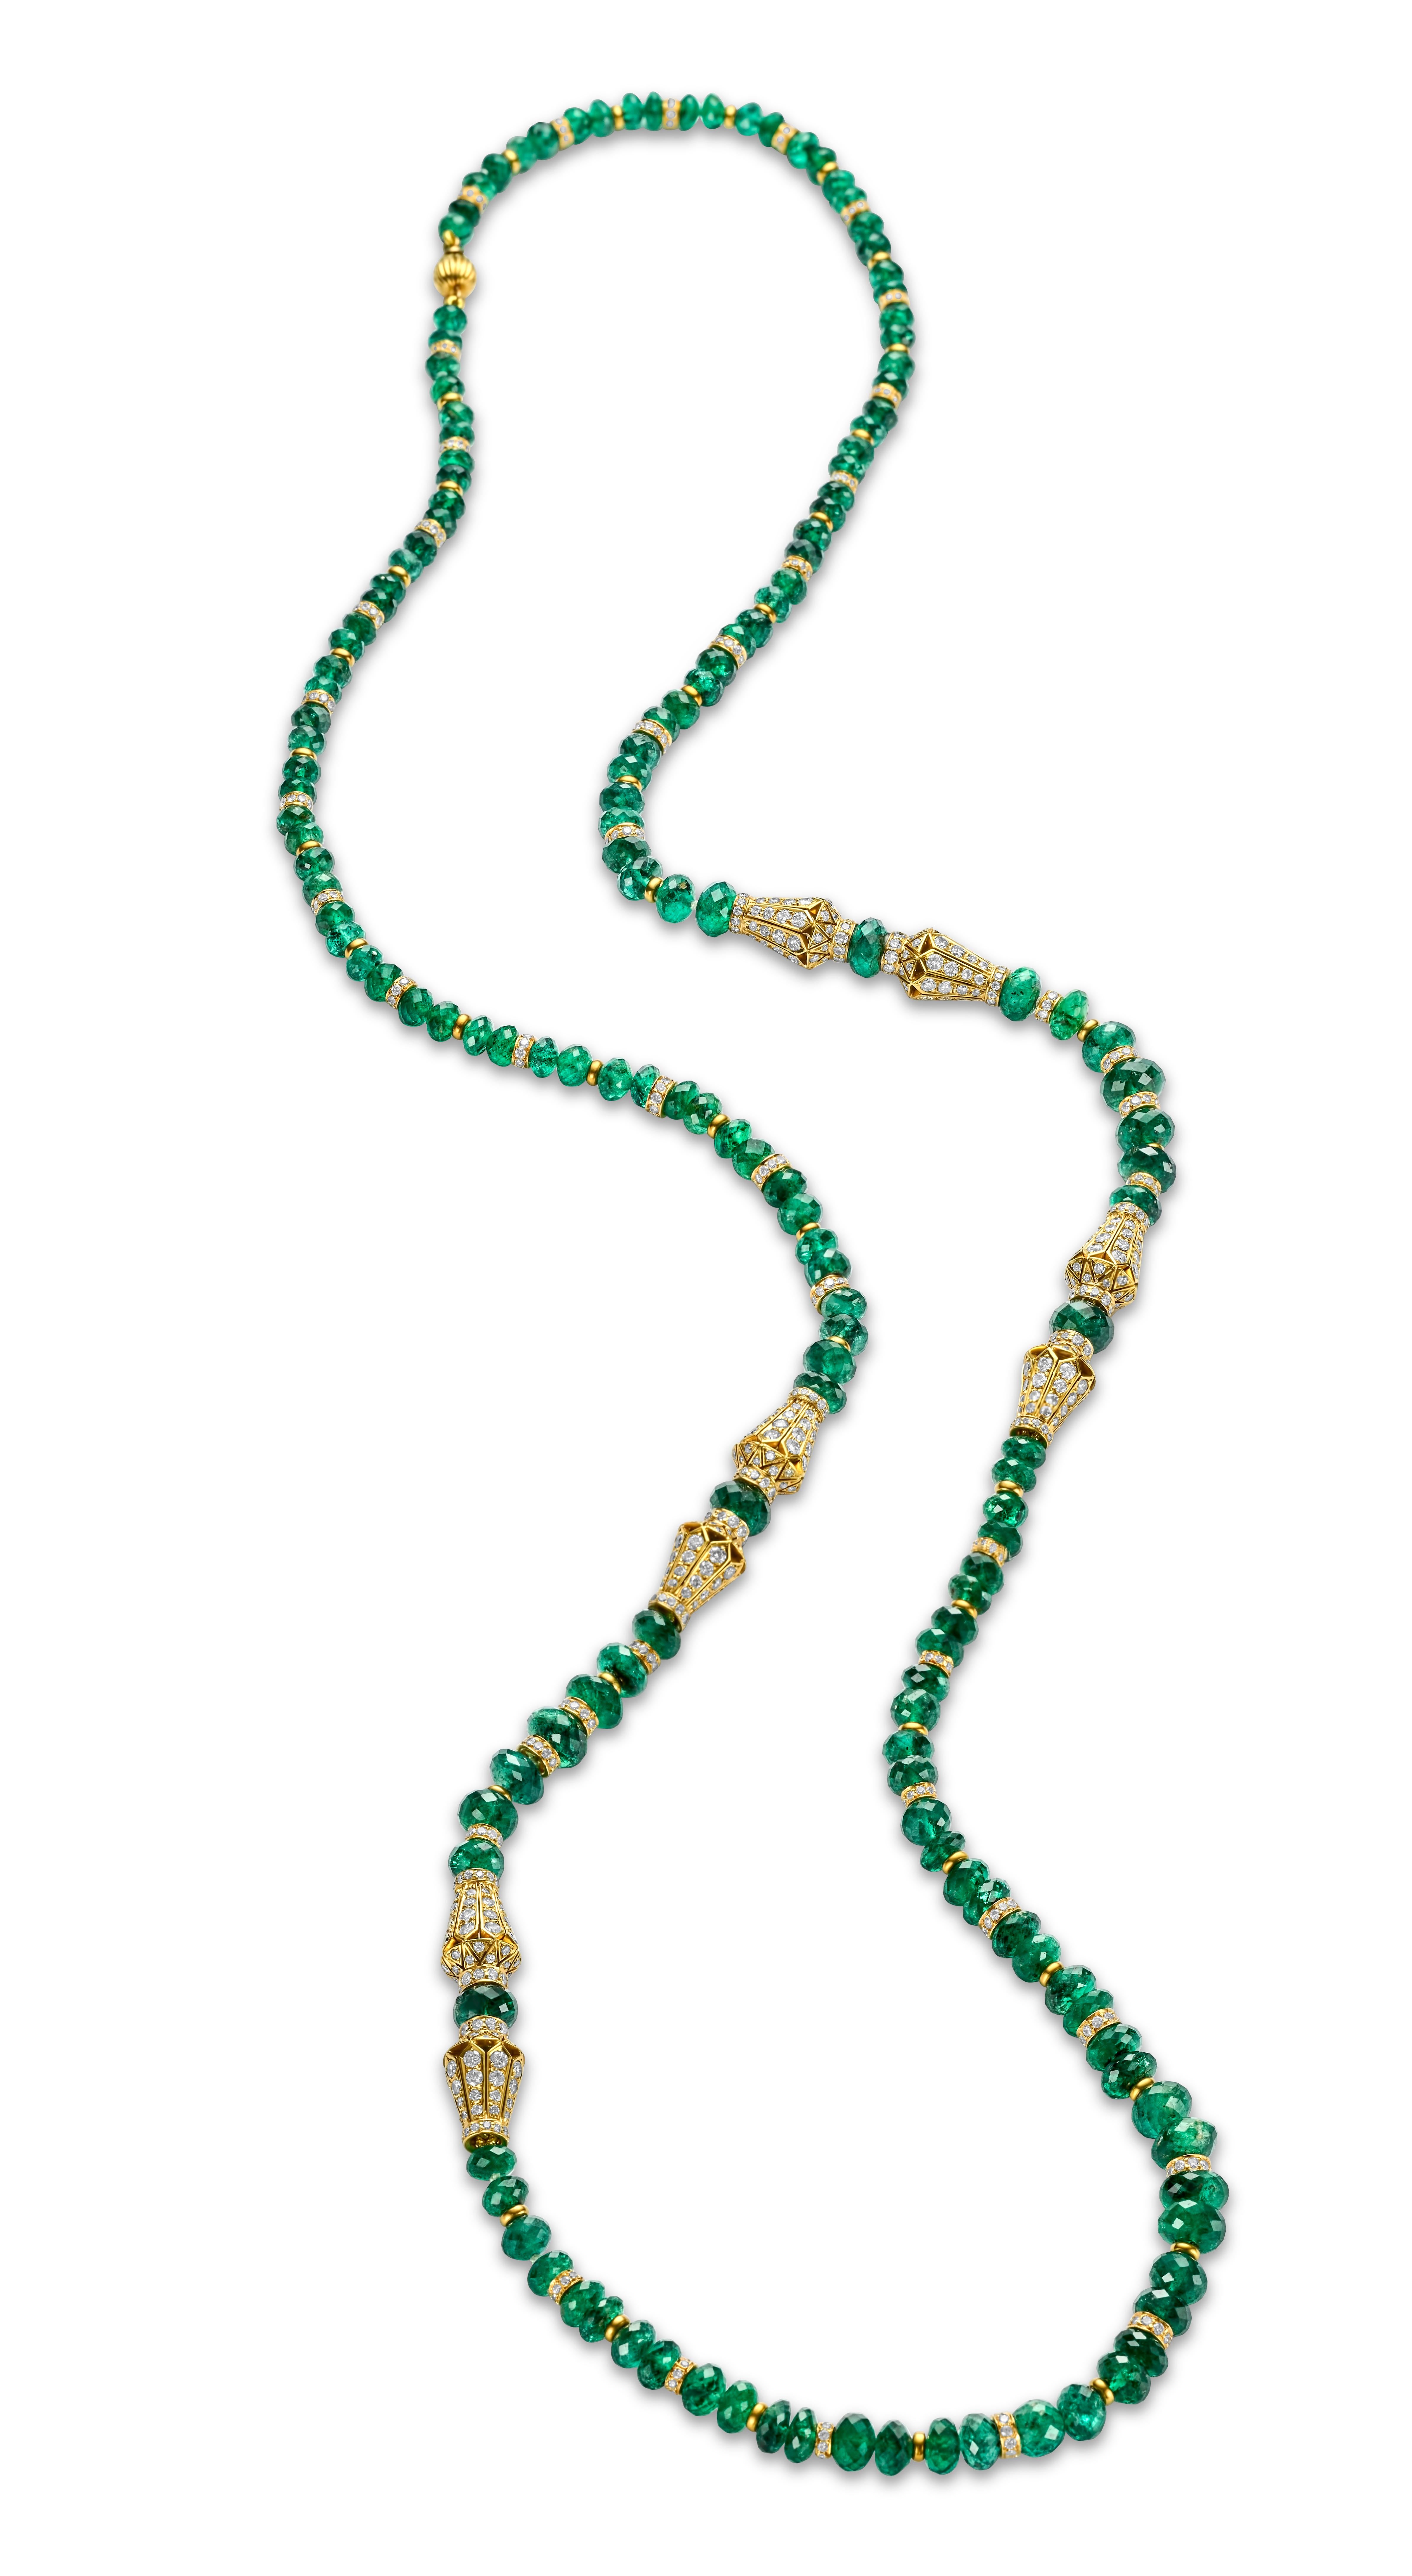 Artisan Adler Genèva 18kt Gold Necklaces 480ct Faceted Bead Emeralds CGL Certified For Sale